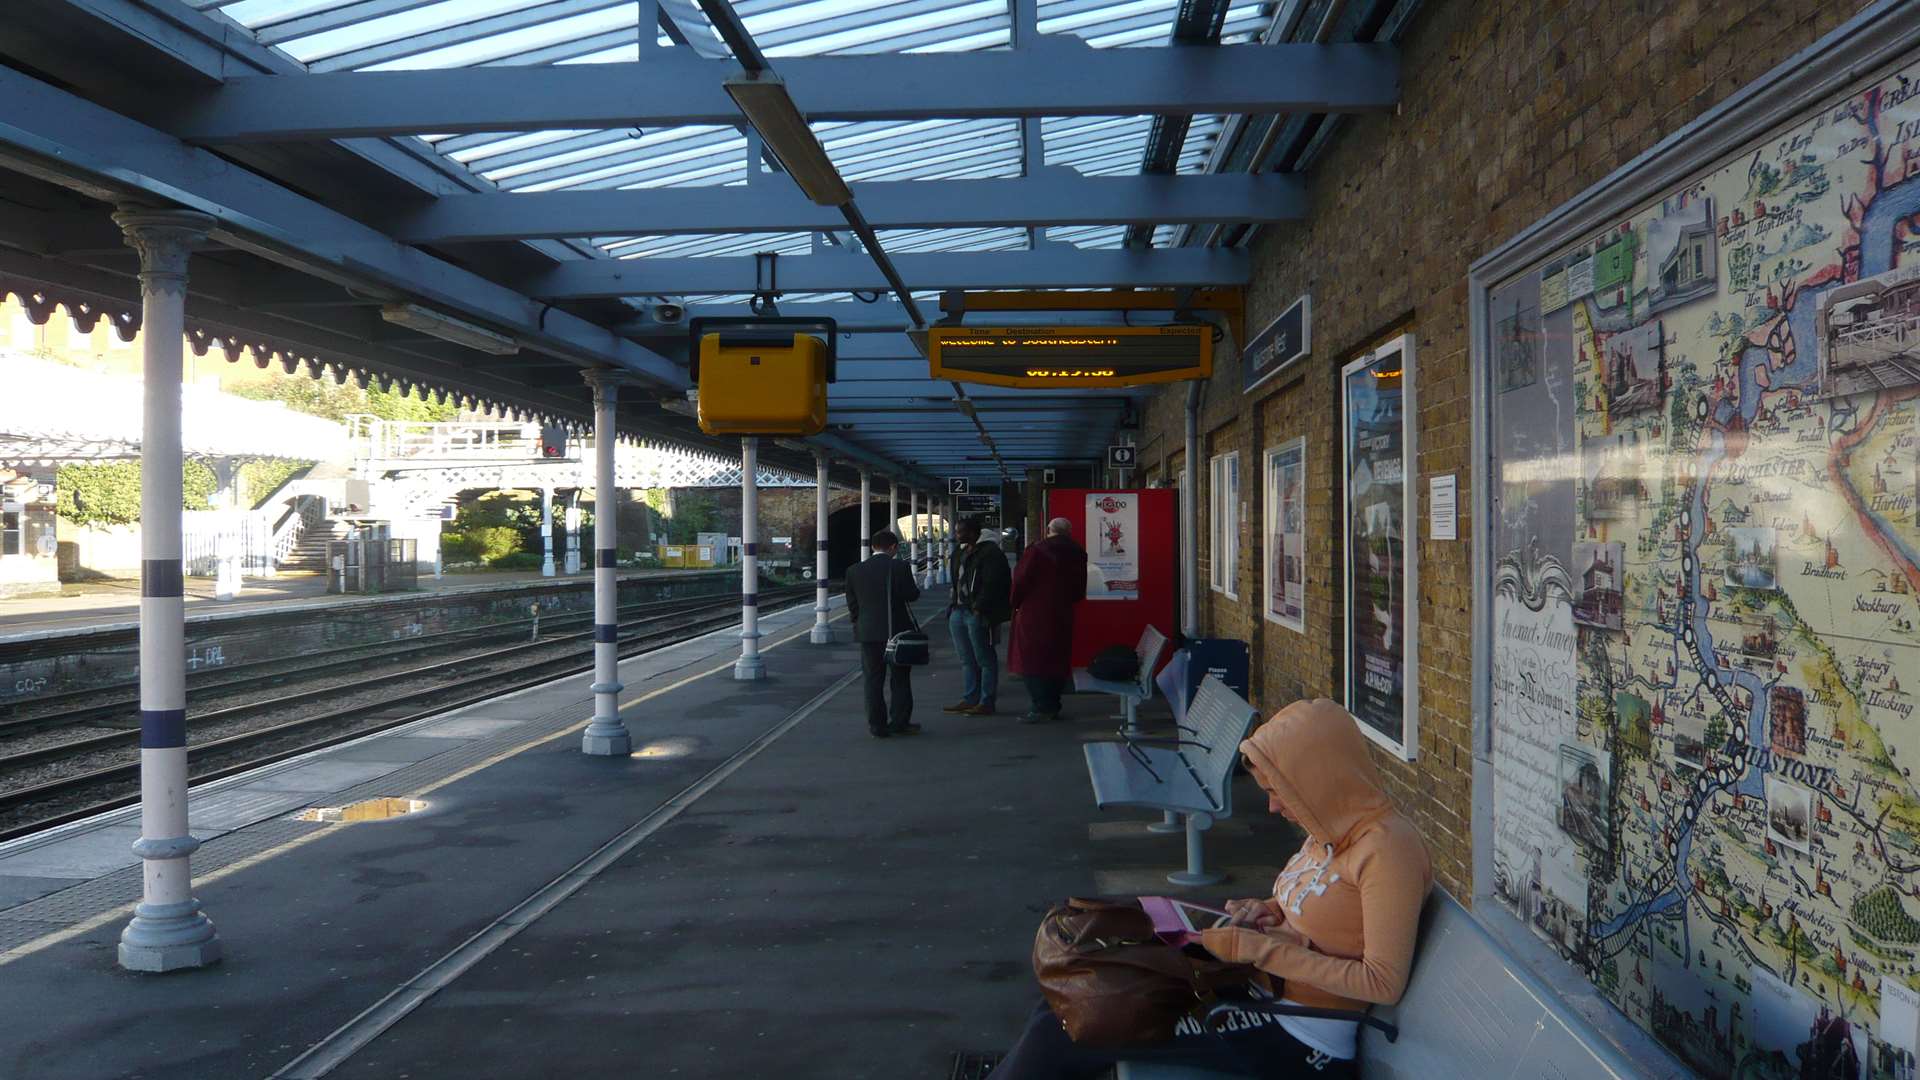 The platform at Maidstone West station